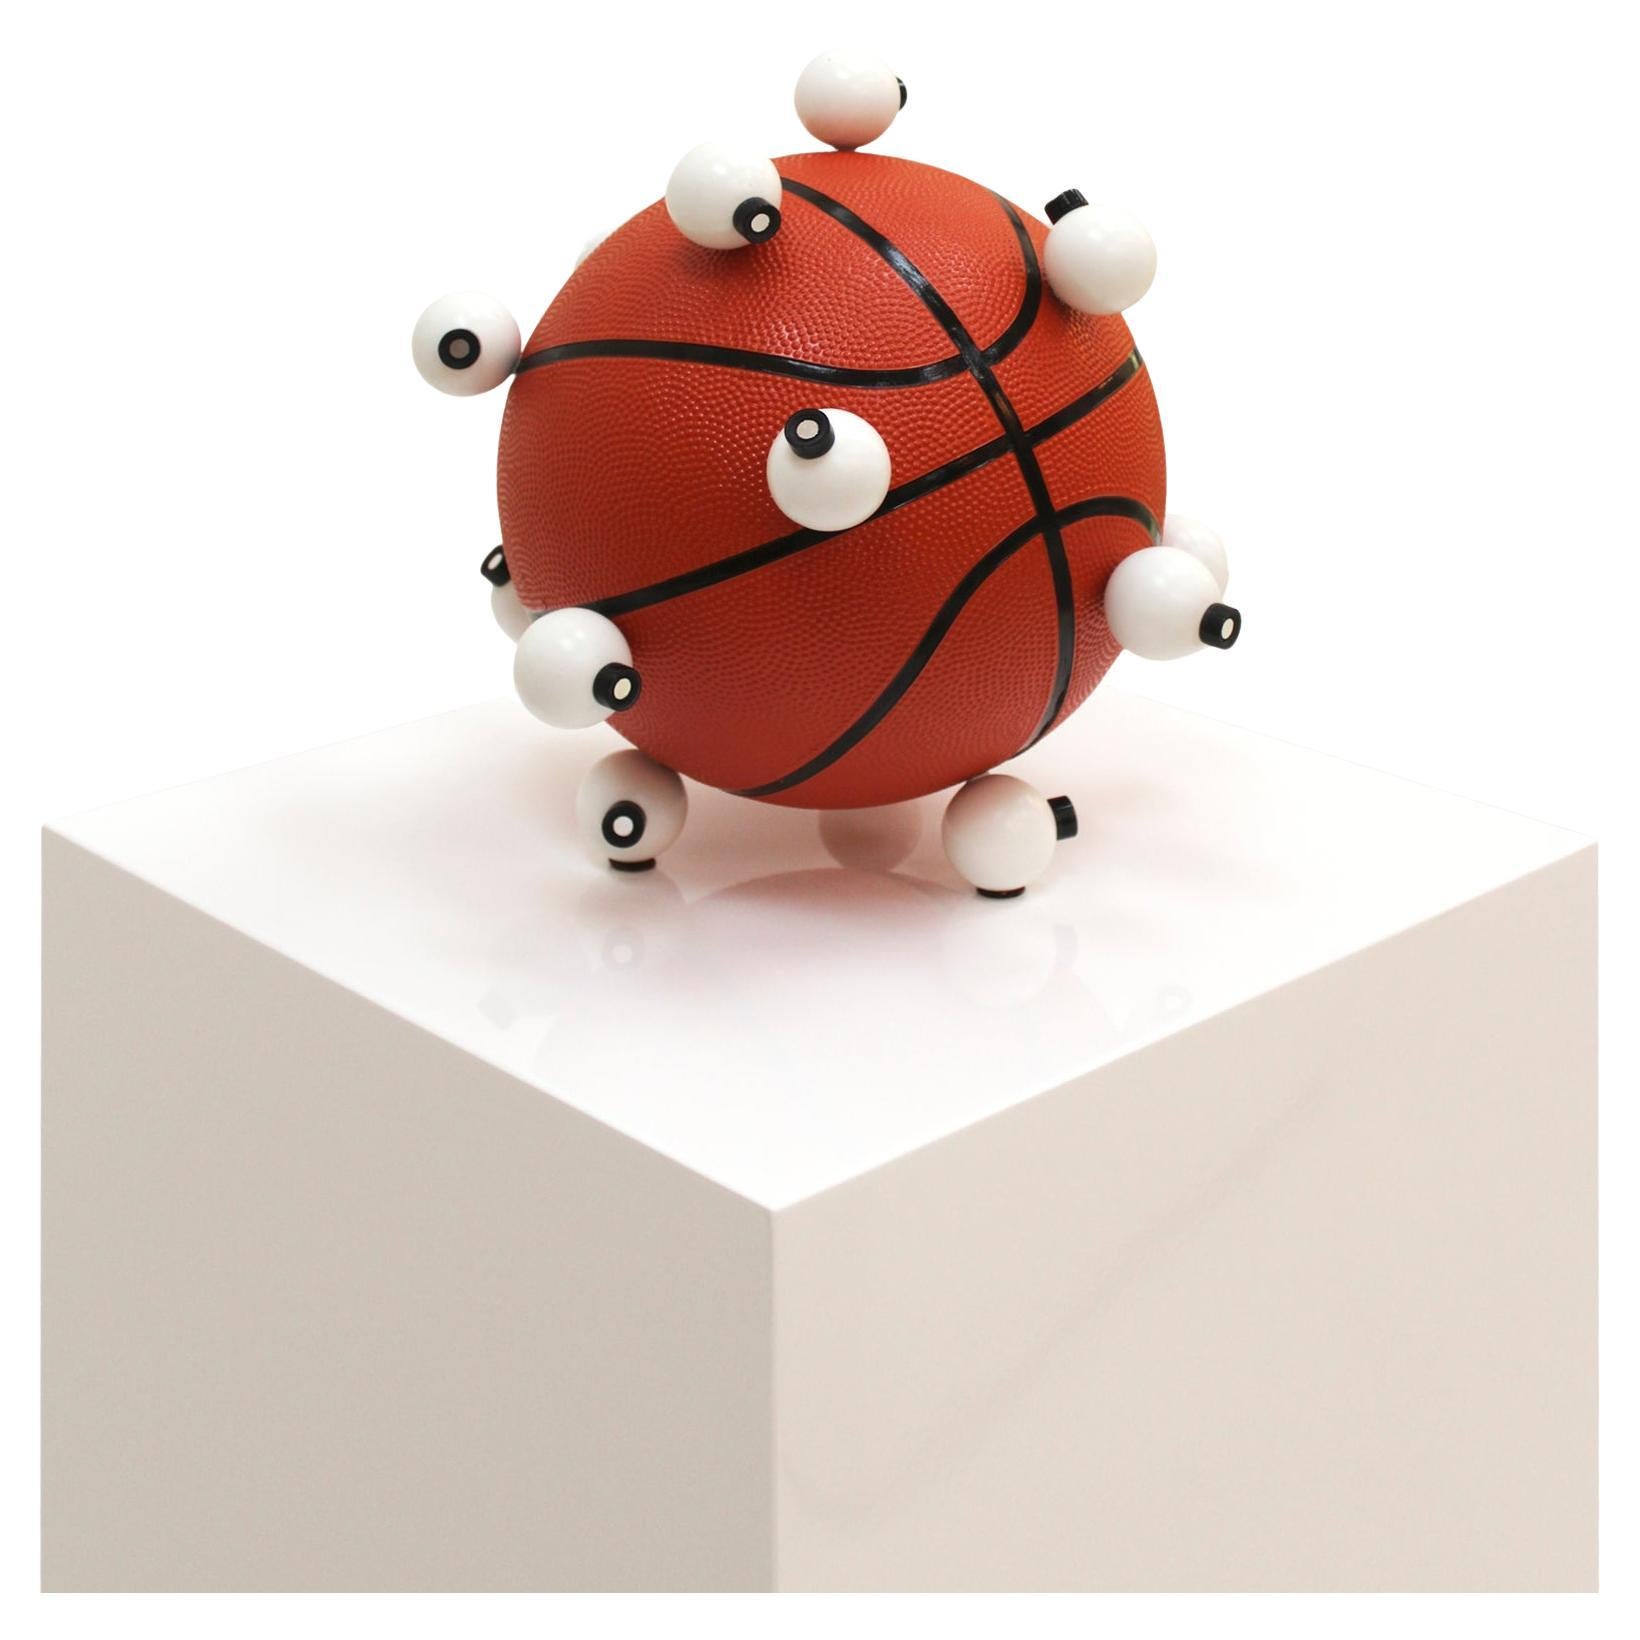 ”Evidence” Bascketball Sculpture made by Alexandre Arrechea For Sale